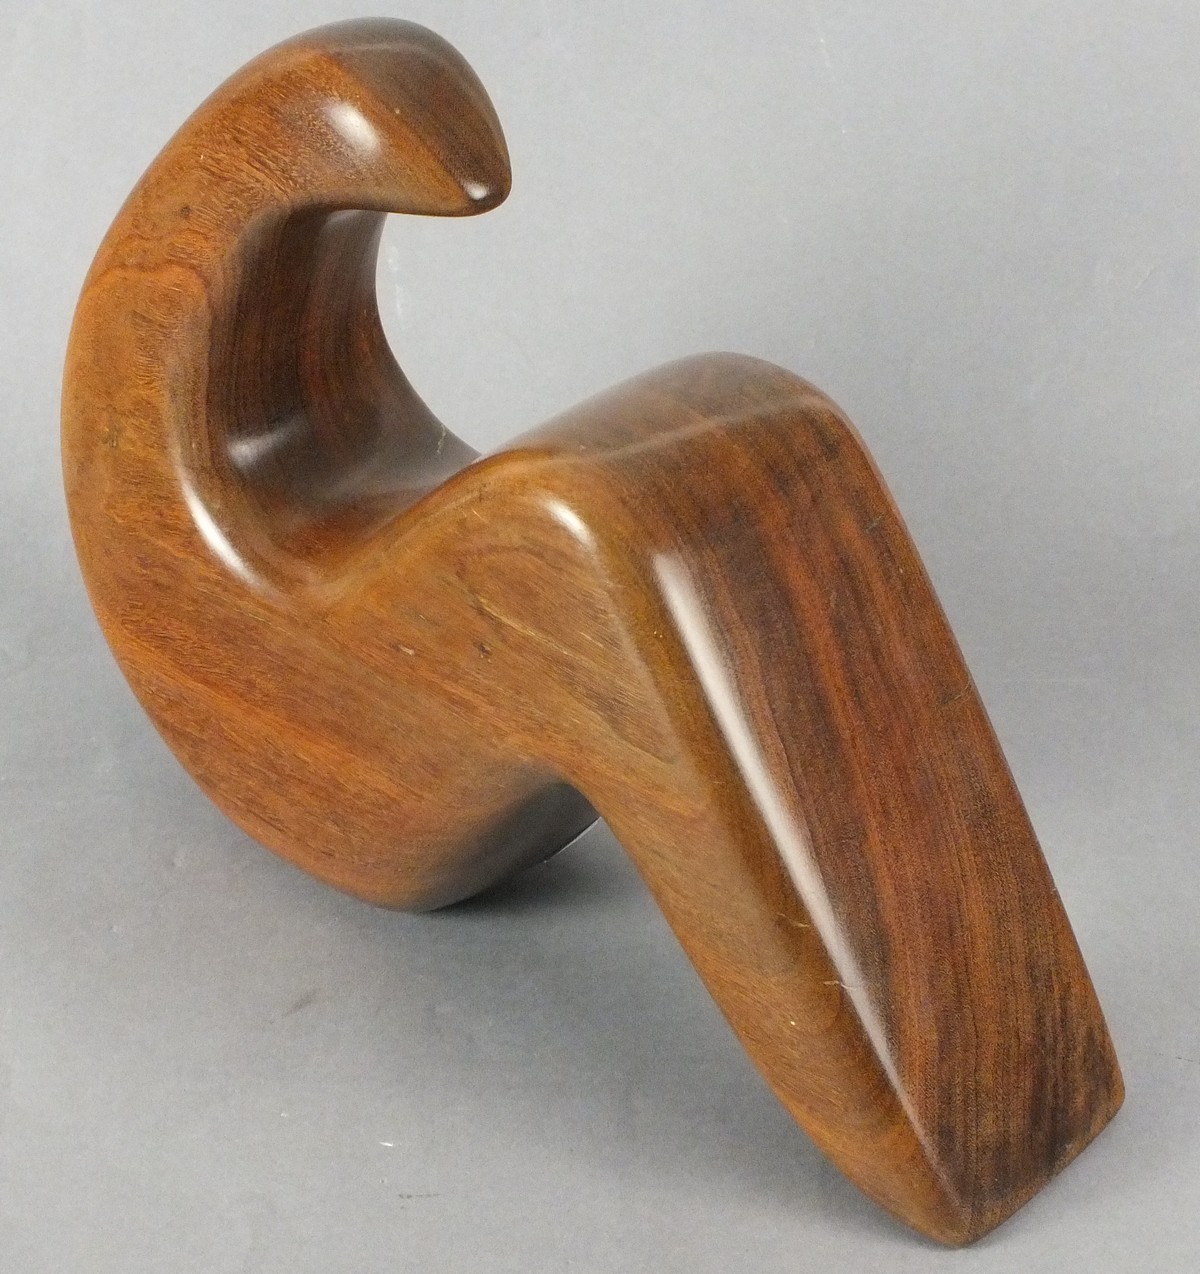 Paul BENYOVITS (British b. 1964) Sitting Female Form, Jarra wood, Signed with initials to base, 15.